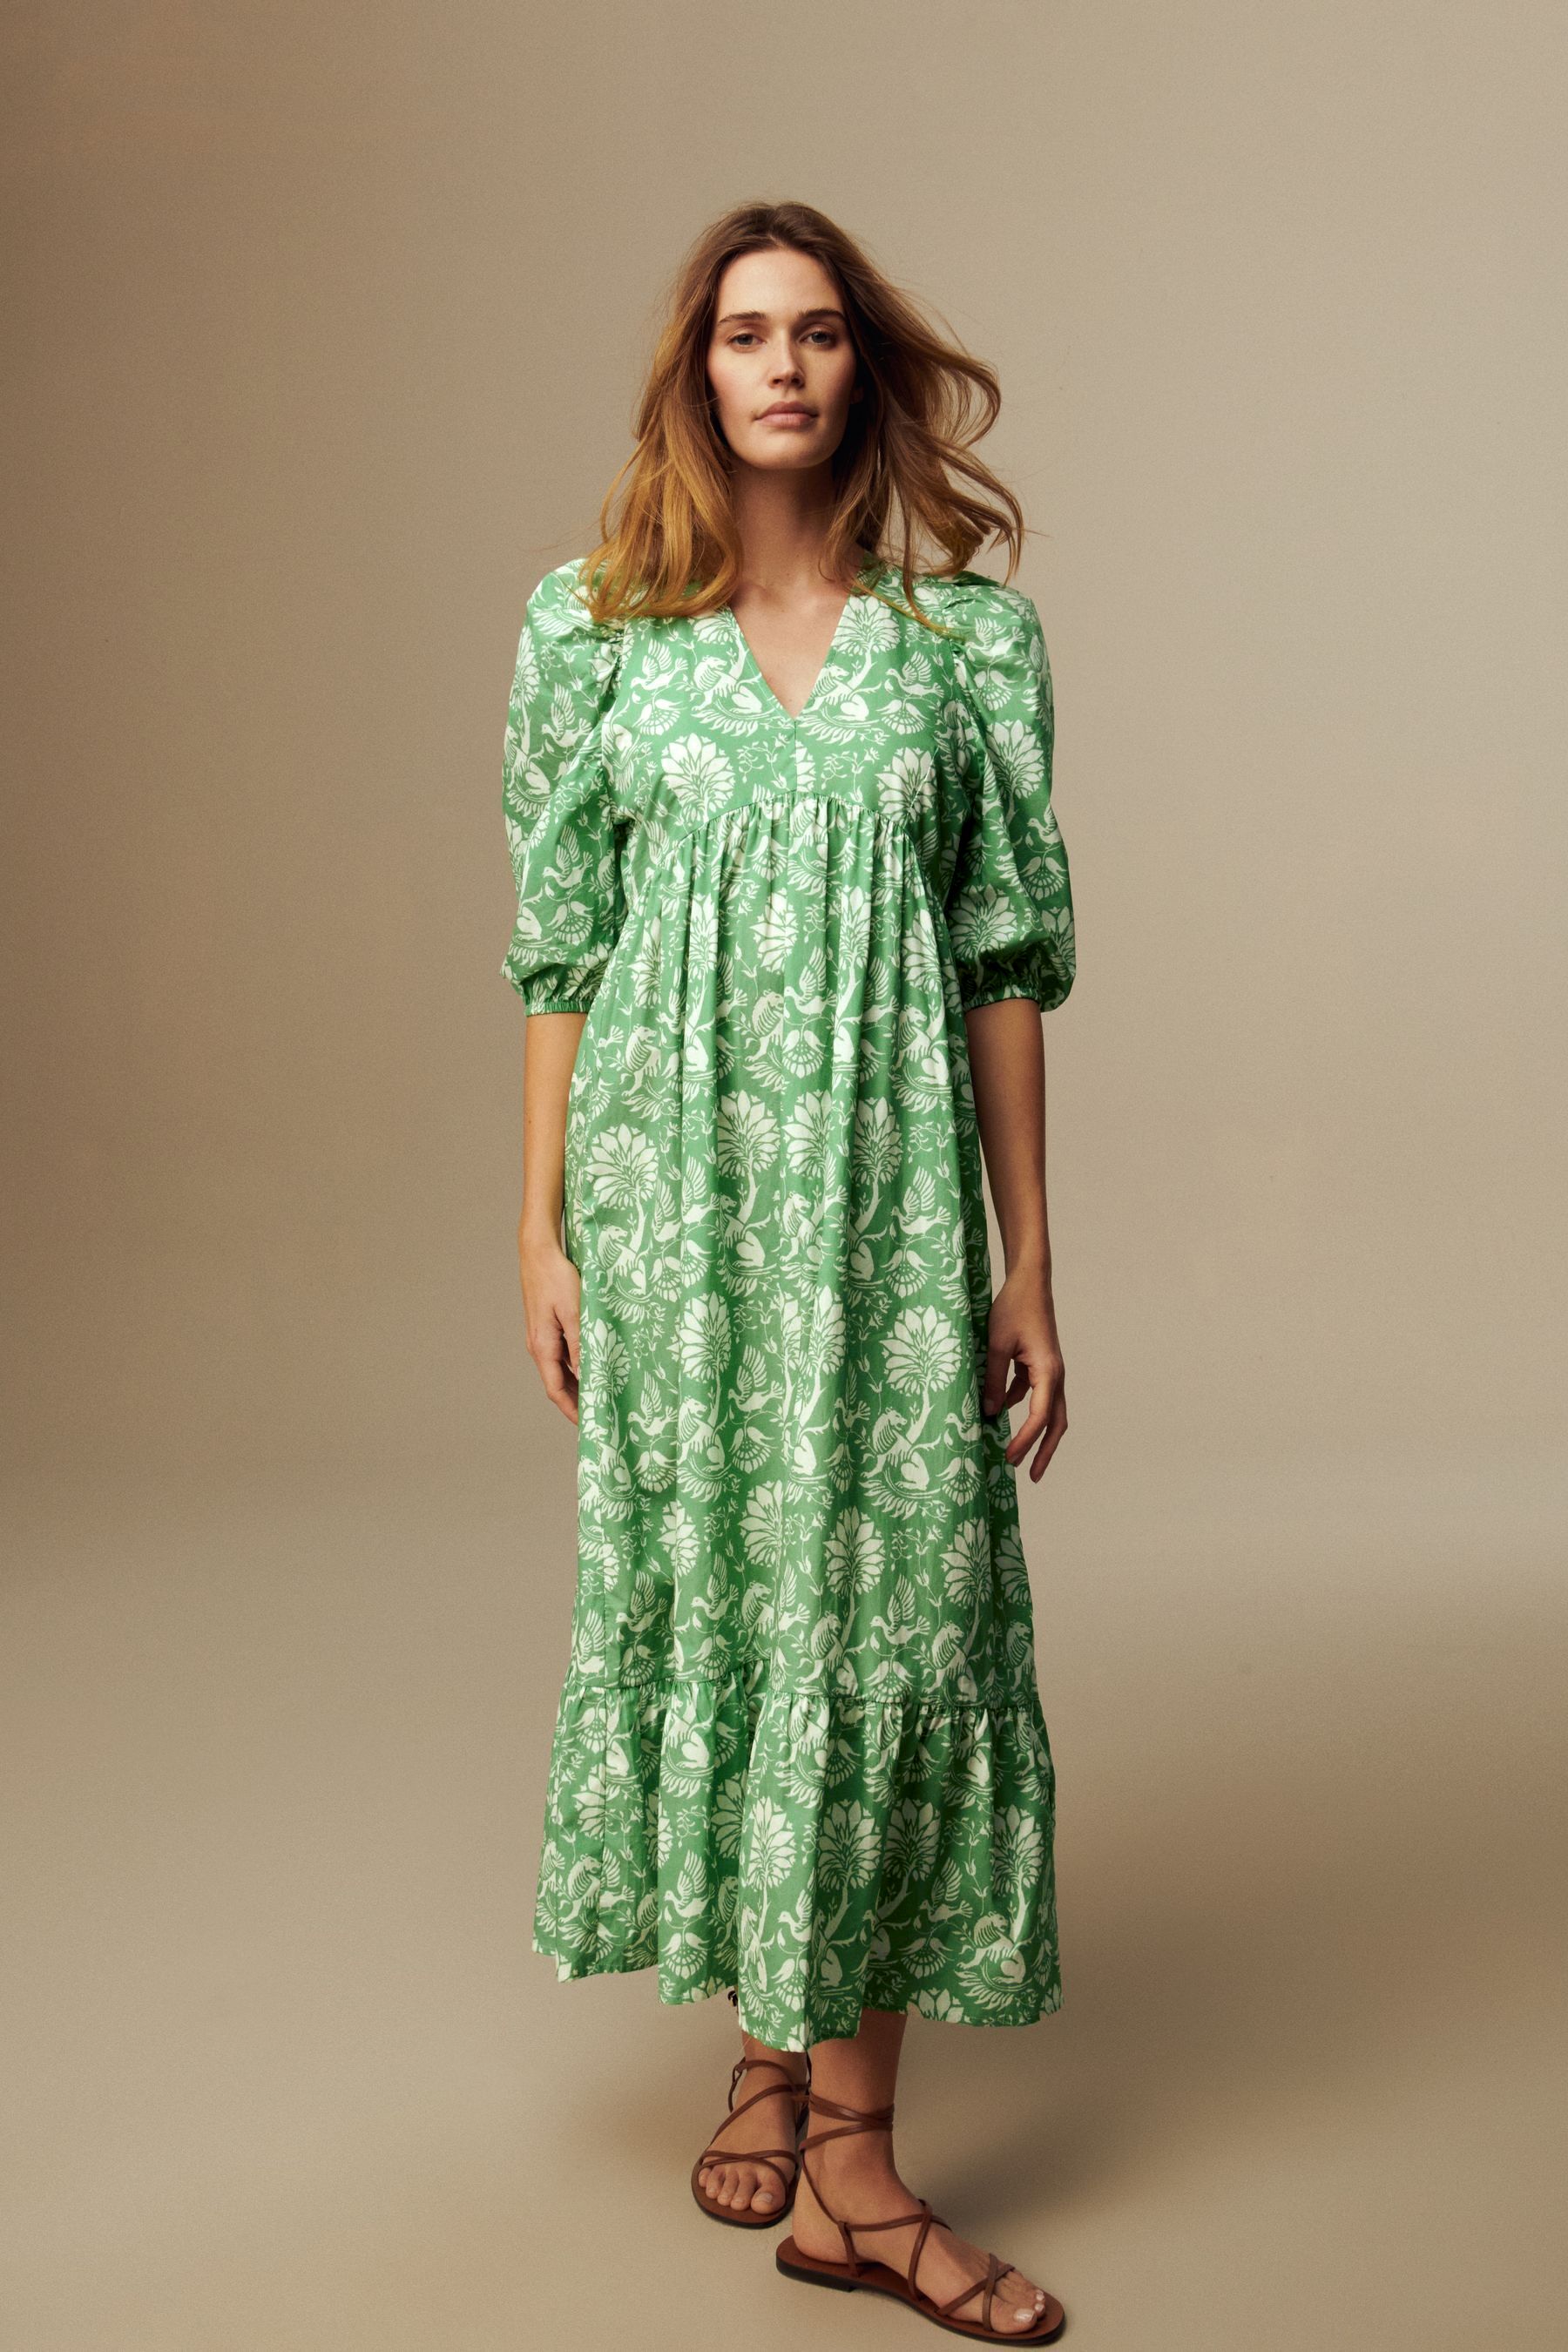 Laura Ashley Green Camelot Print Green Midaxi Dress - Image 1 of 4